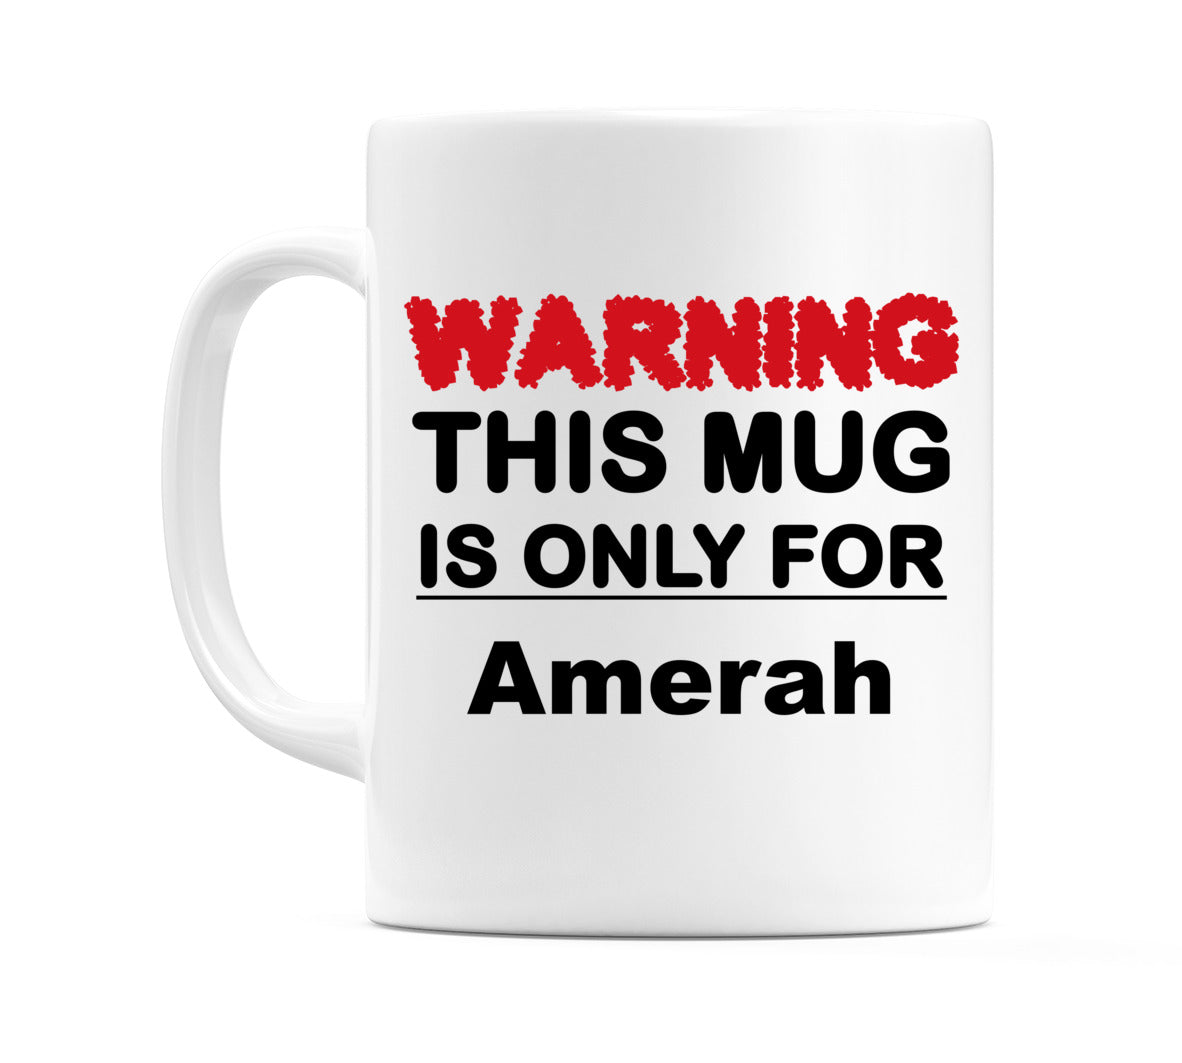 Warning This Mug is ONLY for Amerah Mug